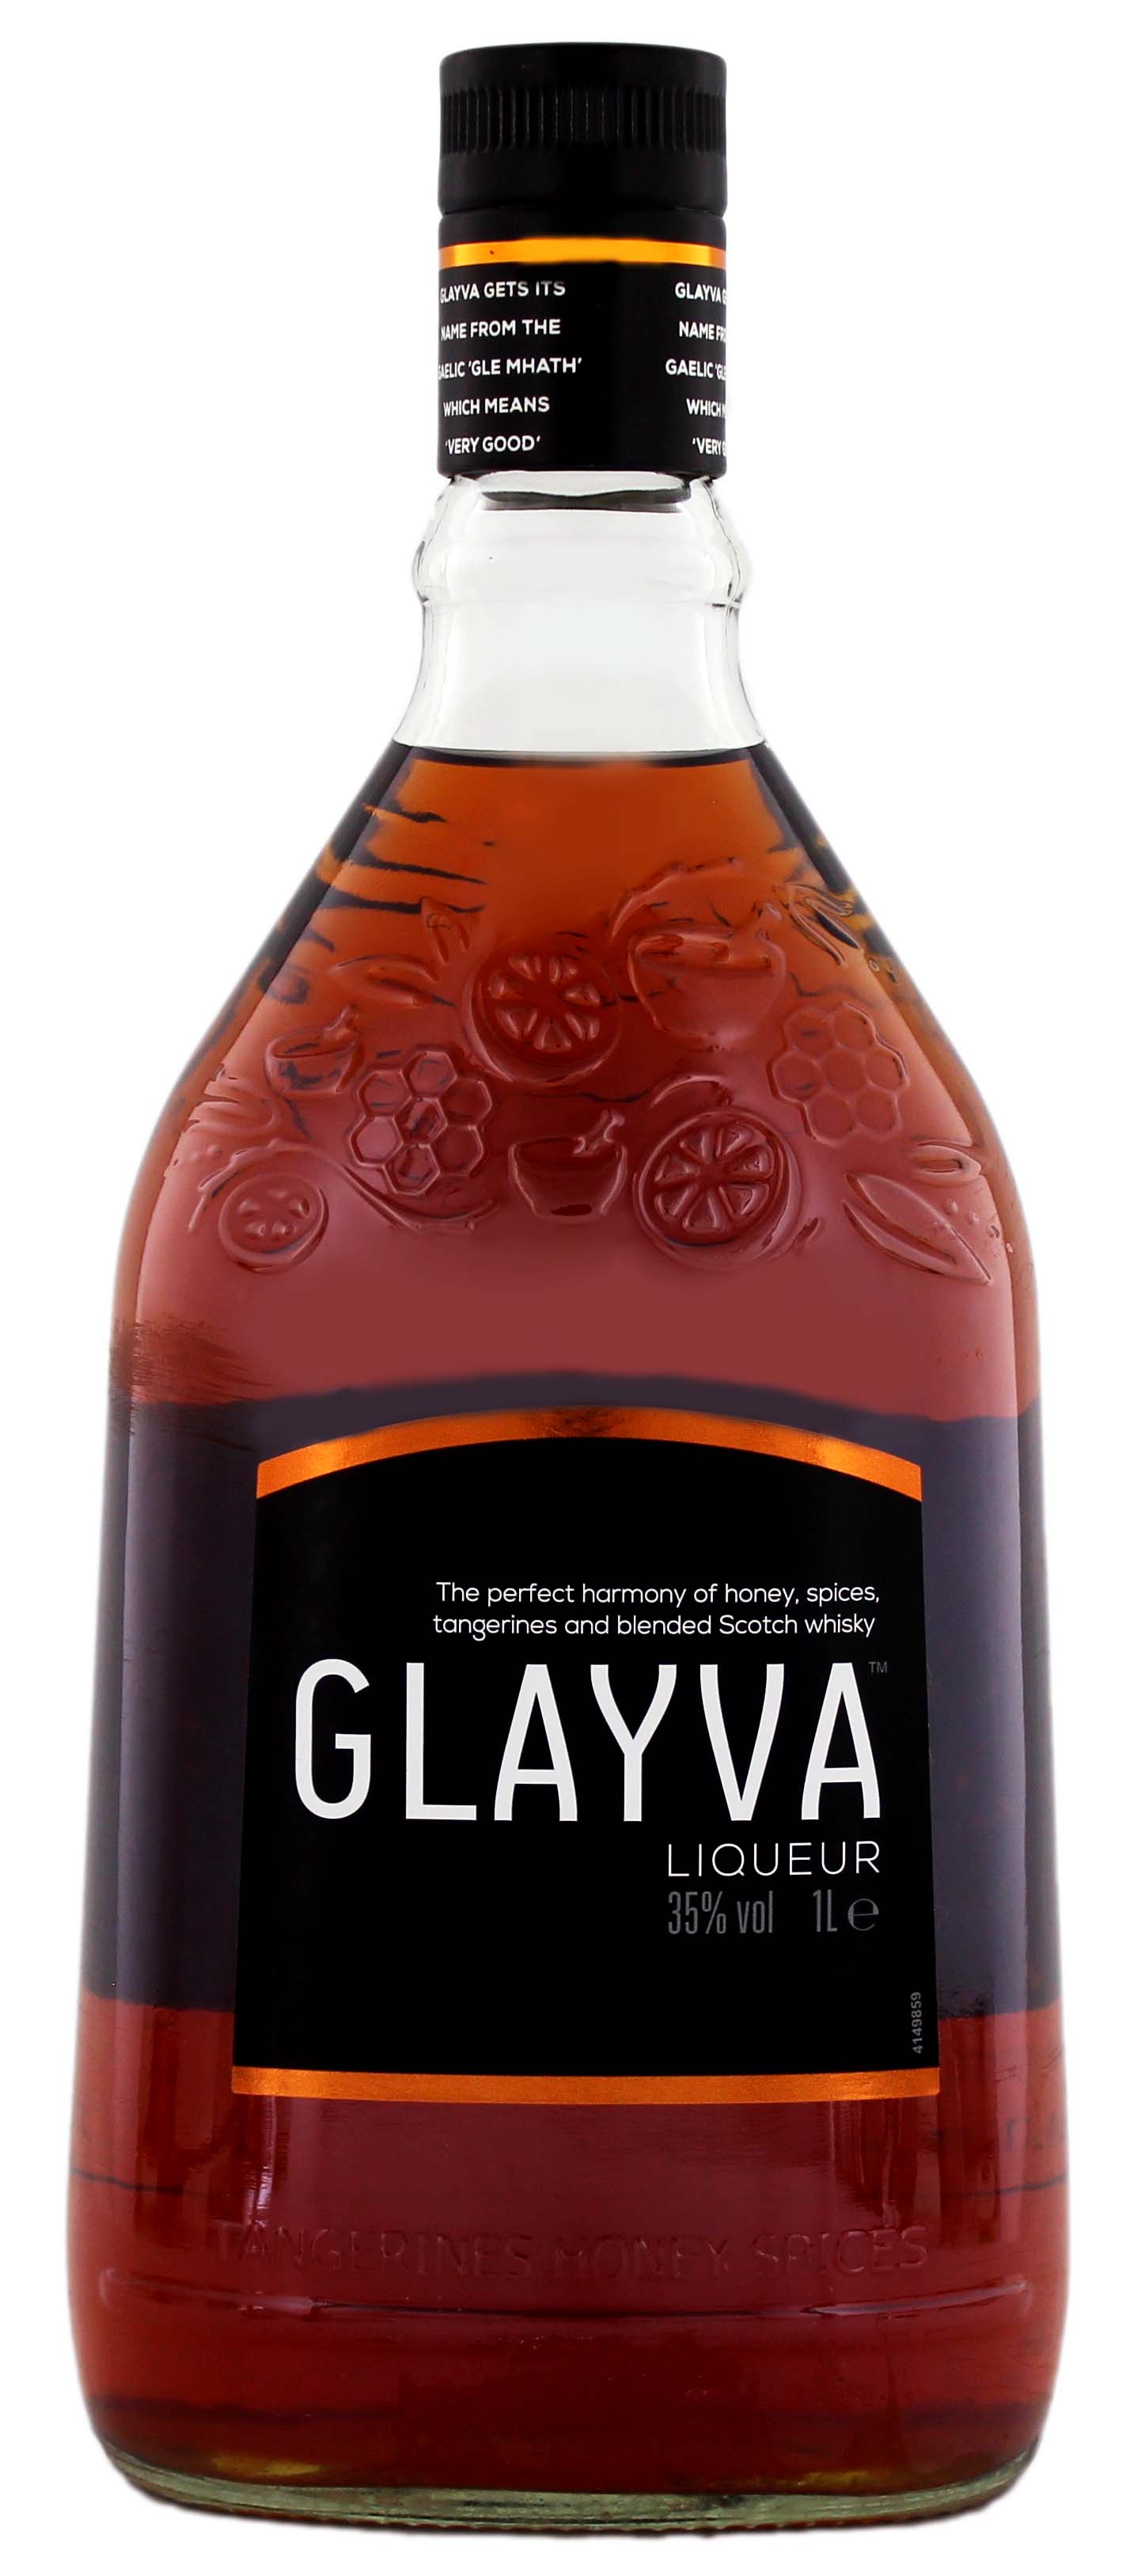 Glayva Whisky Liqueur jetzt kaufen Shop Online Drinkology im 